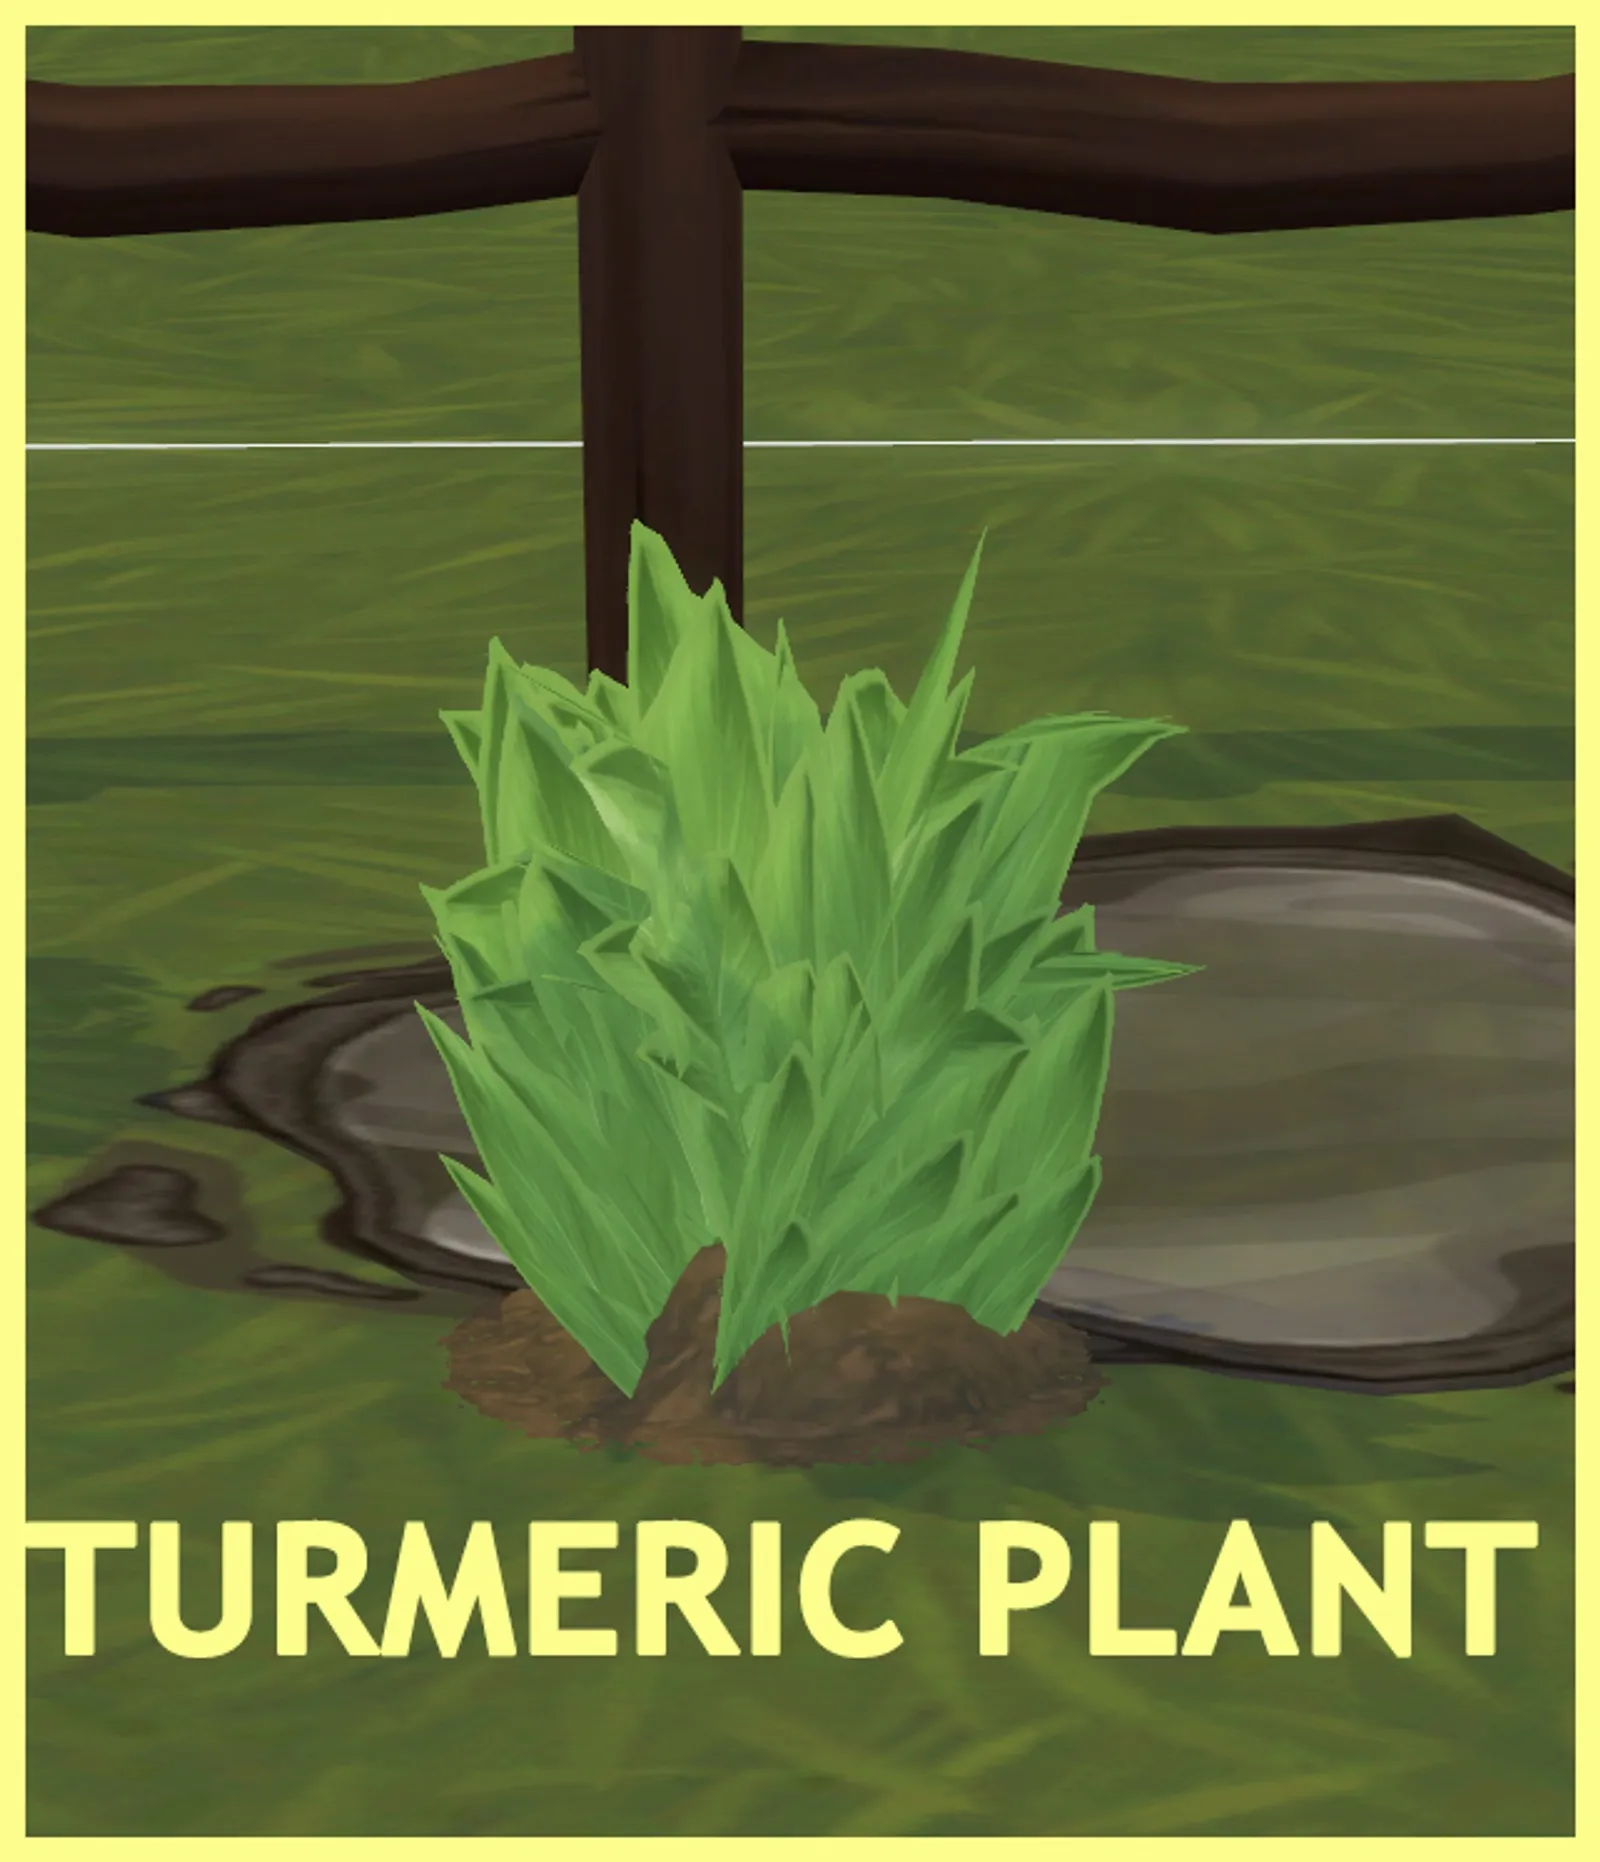 TURMERIC PLANT